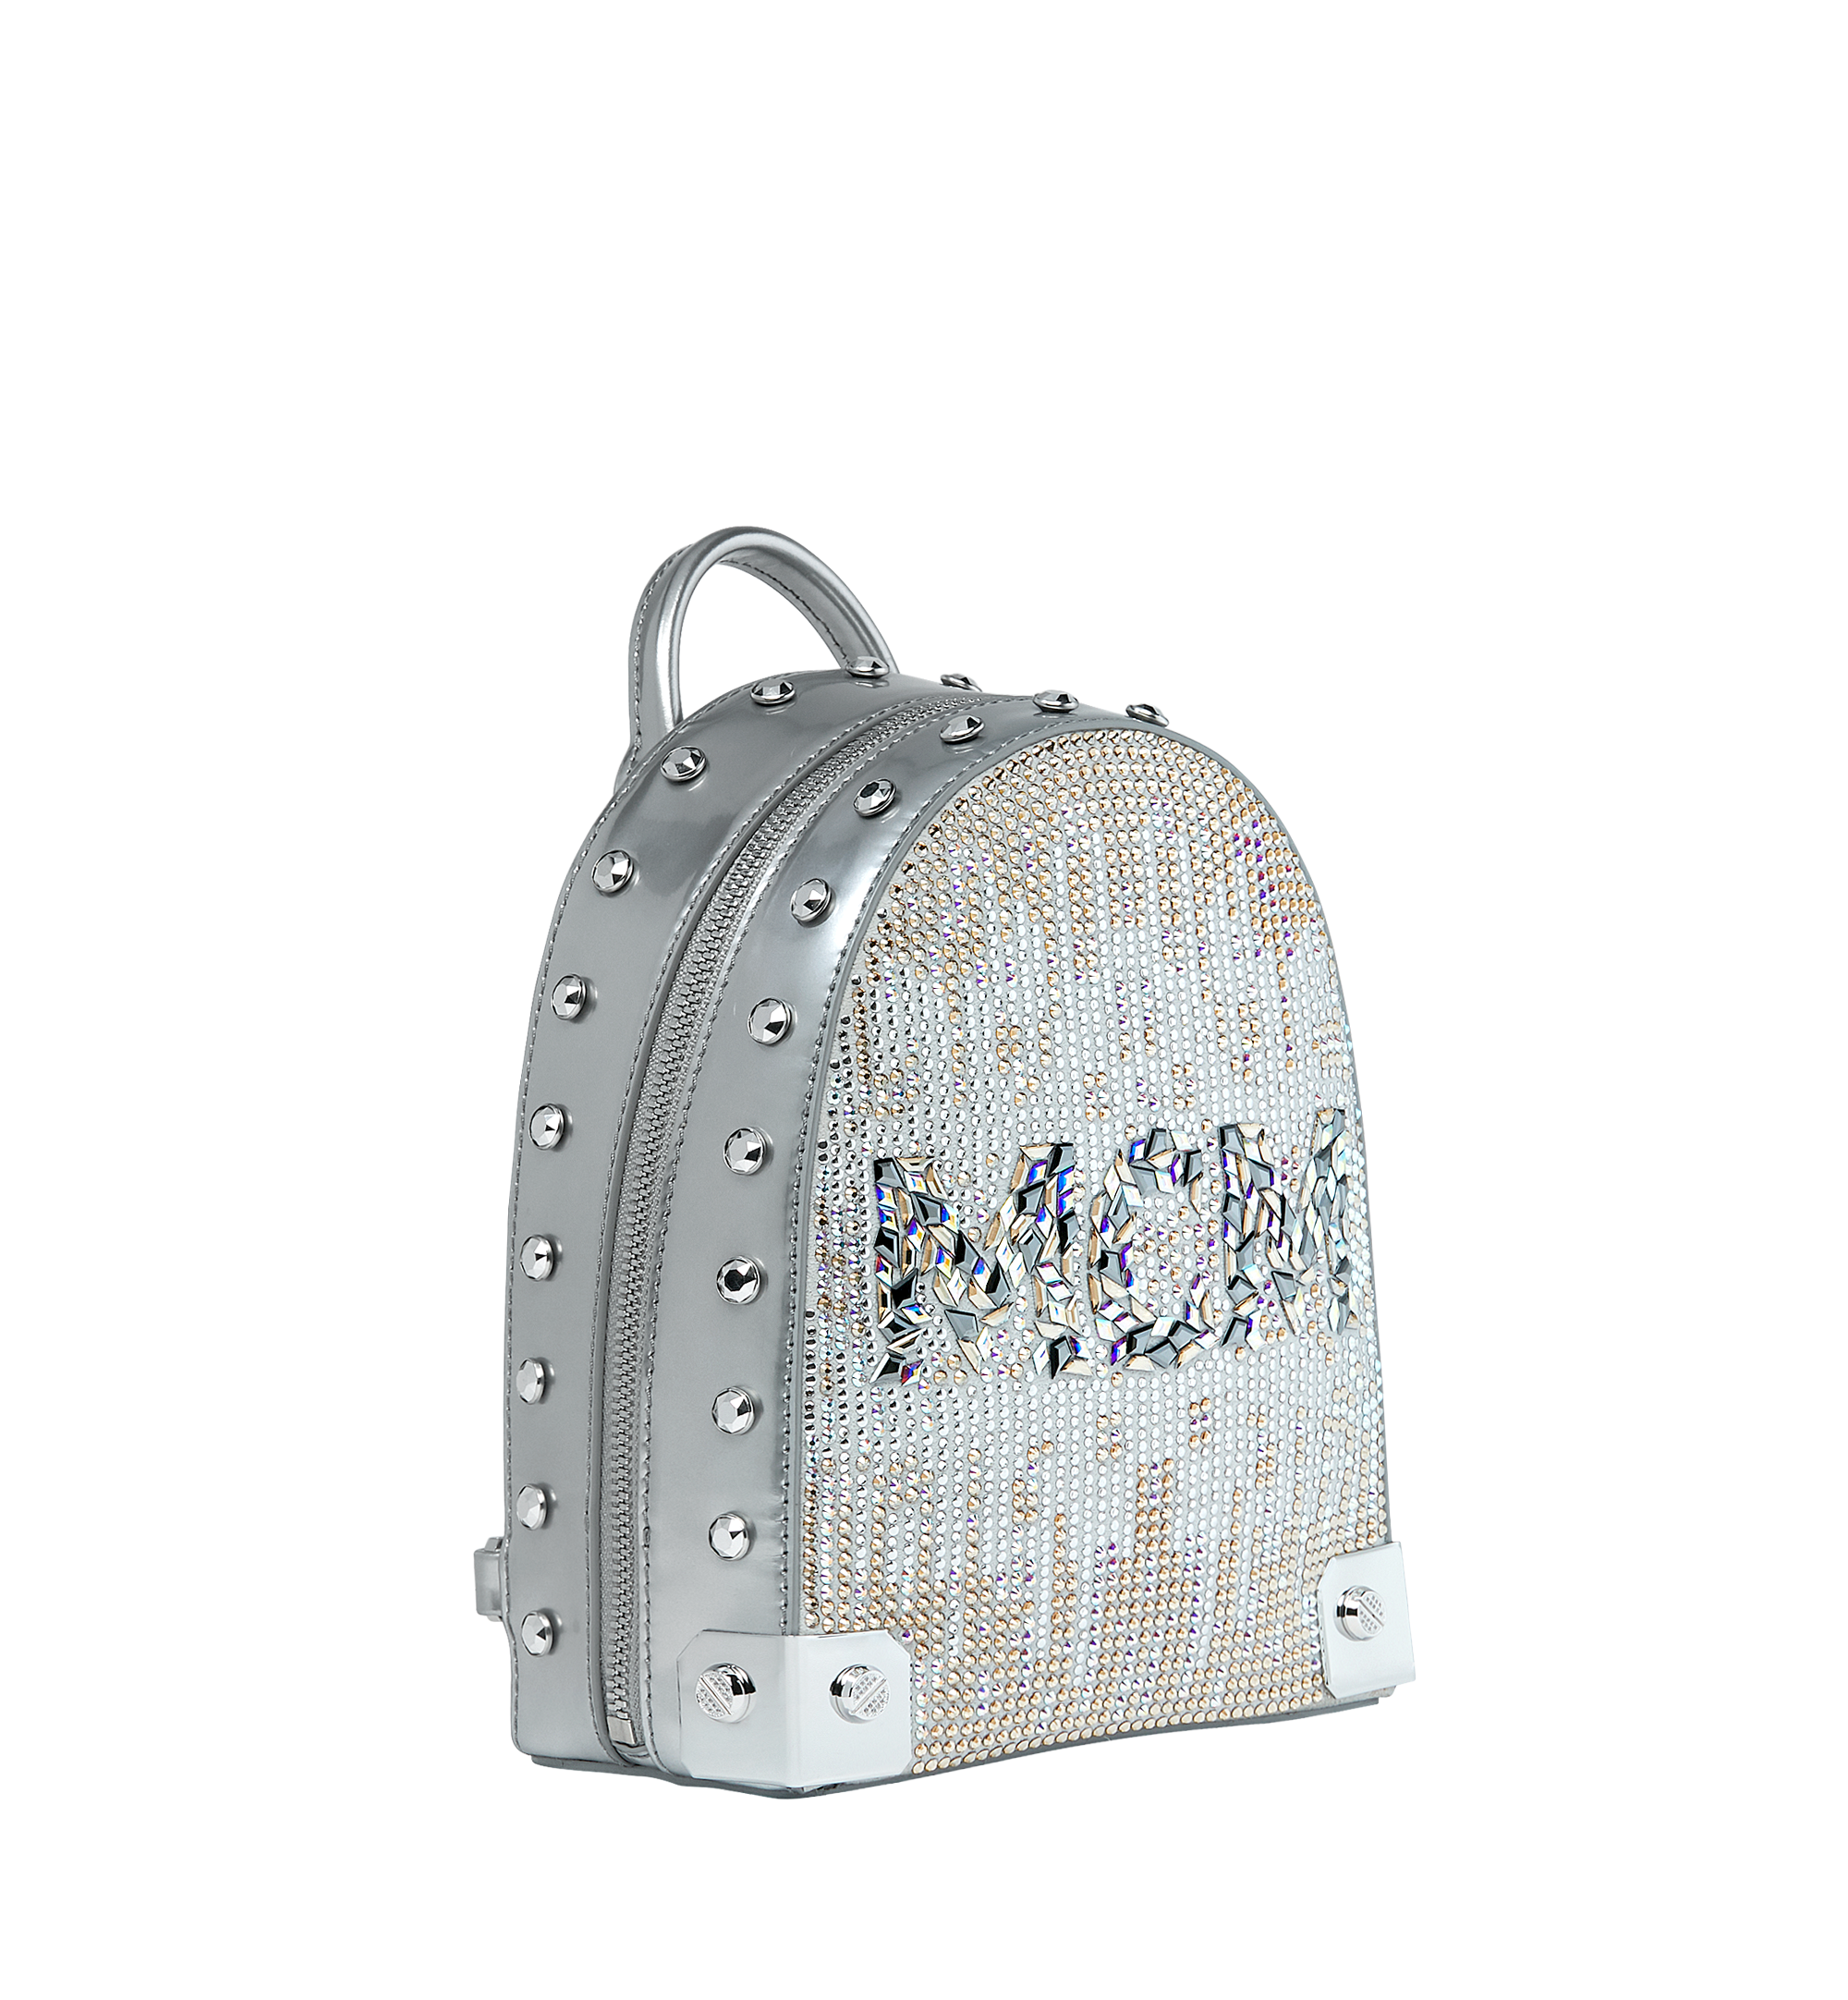 20 cm / 8 in Stark Bebe Boo Backpack in Mosaic Crystal Berlin Silver ...